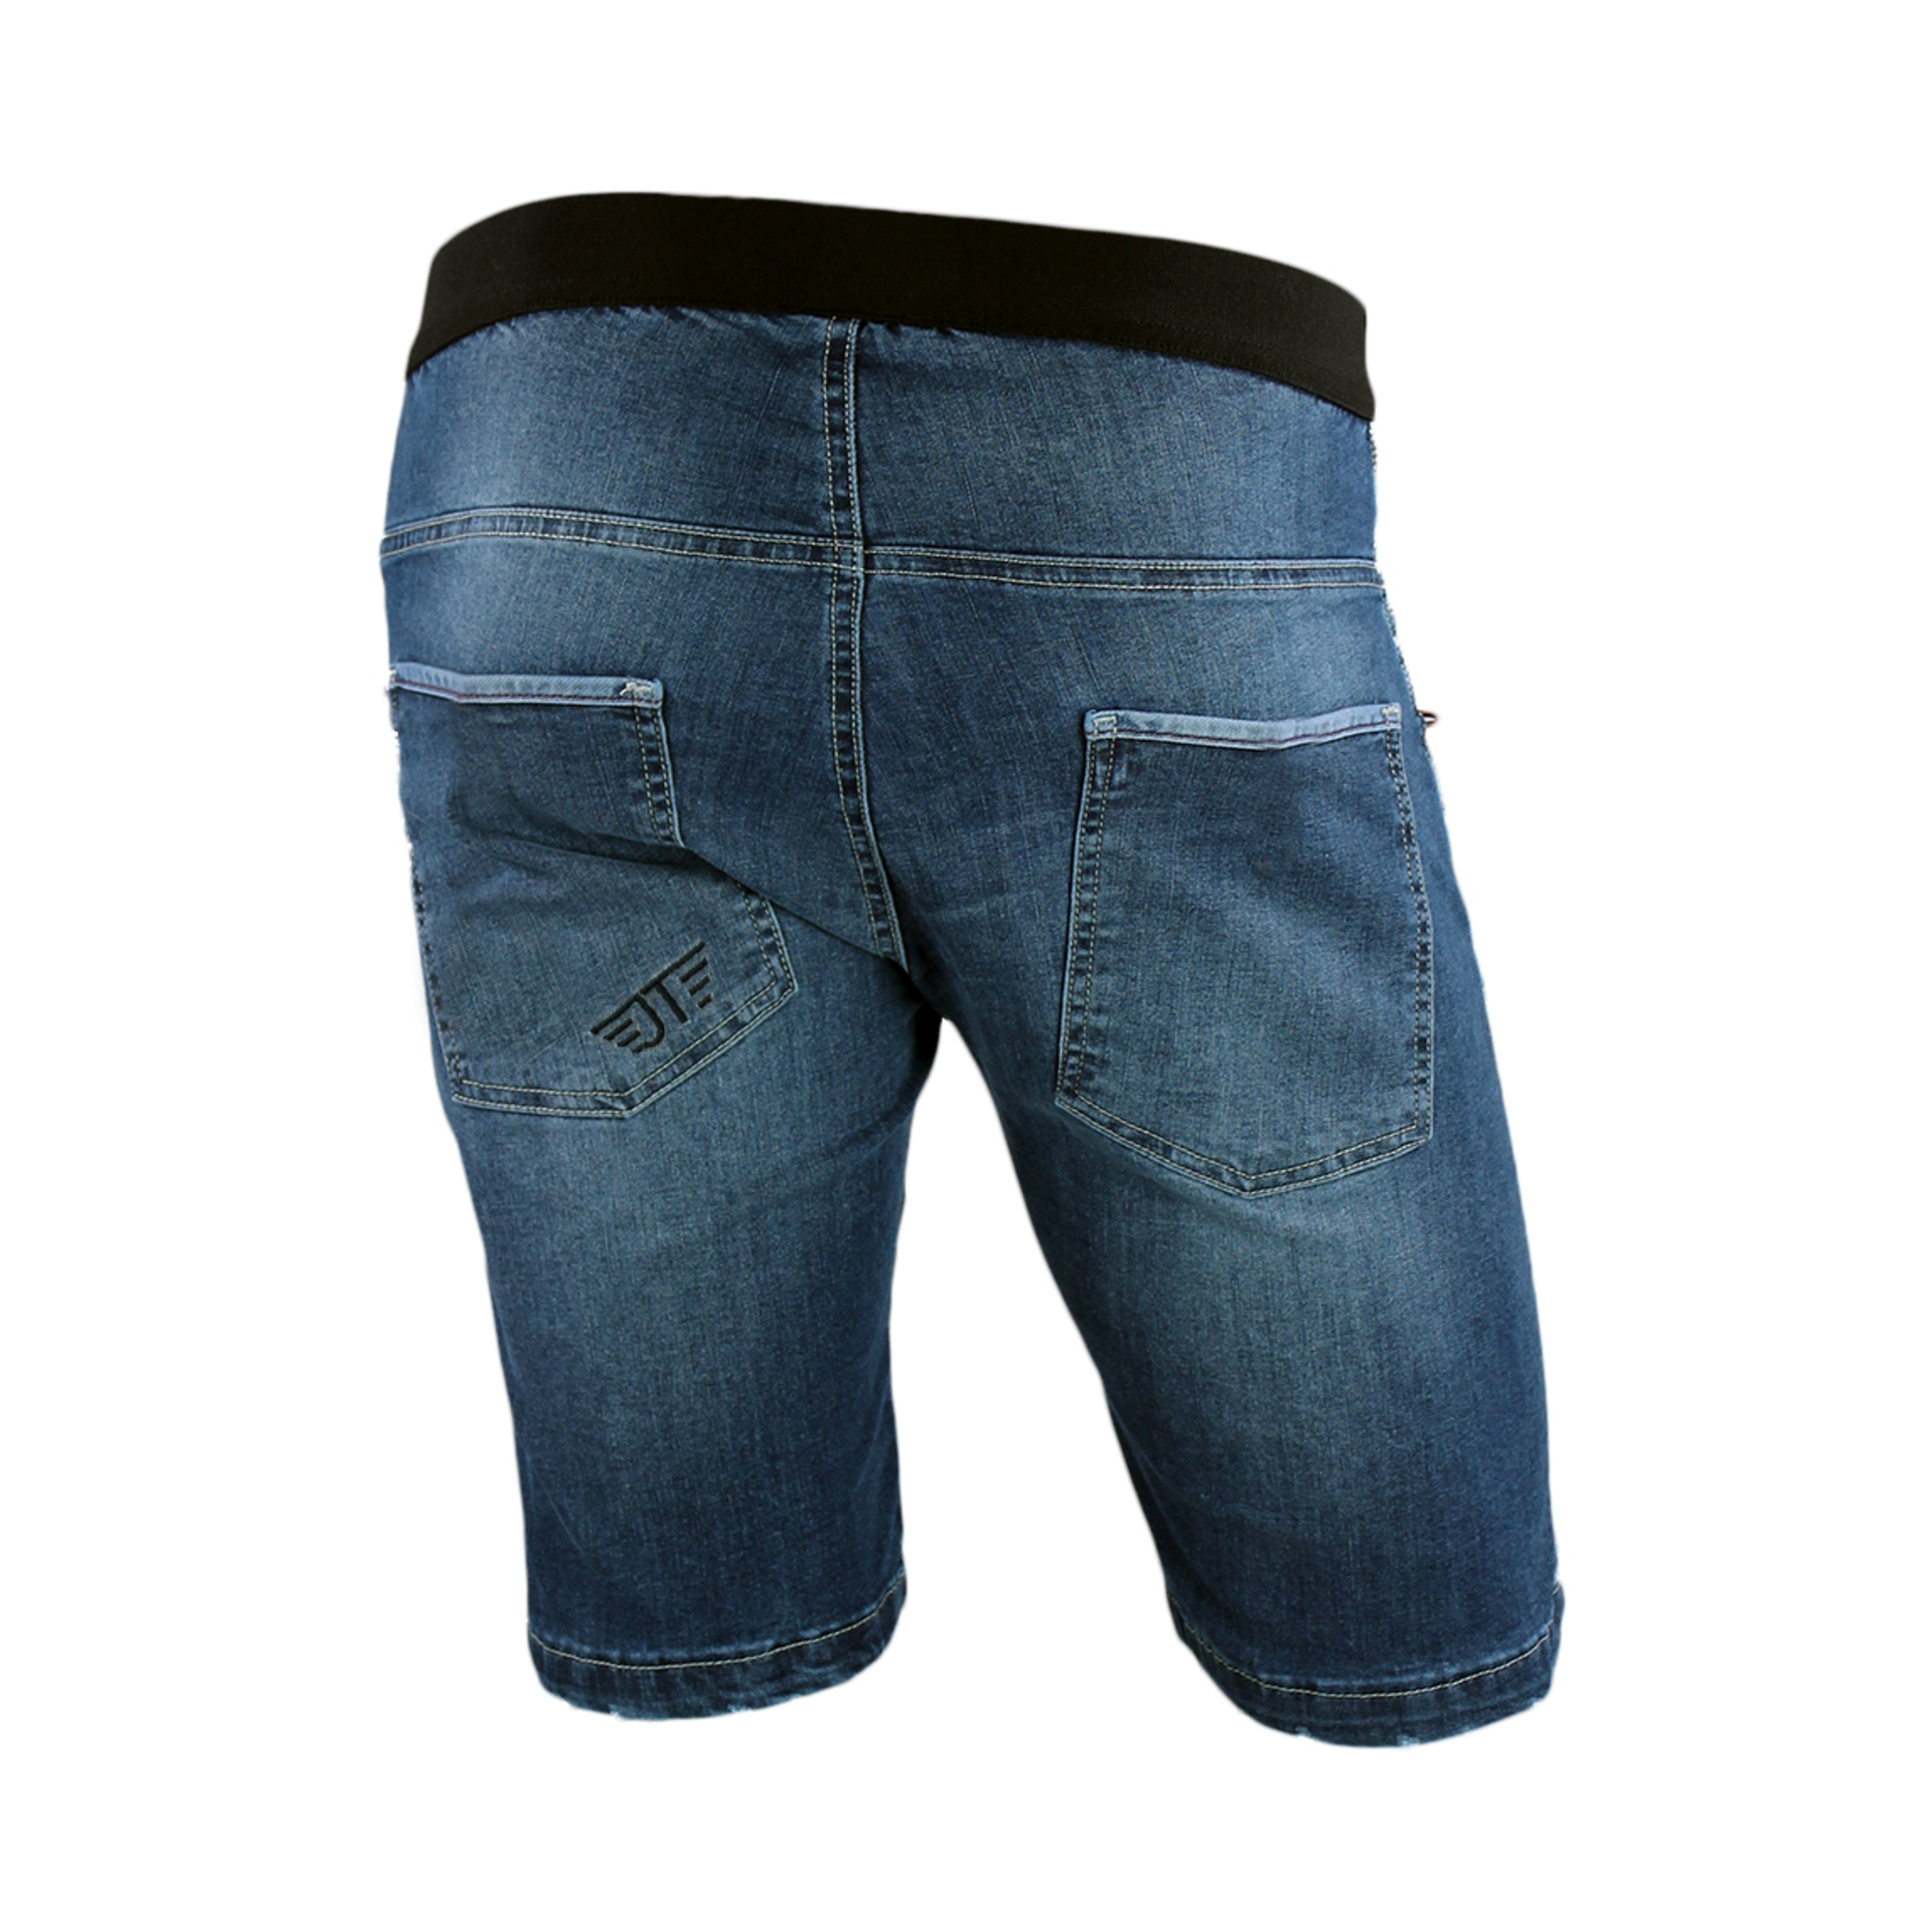 Pantalón Escalada Jeanstrack Turia Br - Azul Denim - Turia Br Jeans Dark  MKP